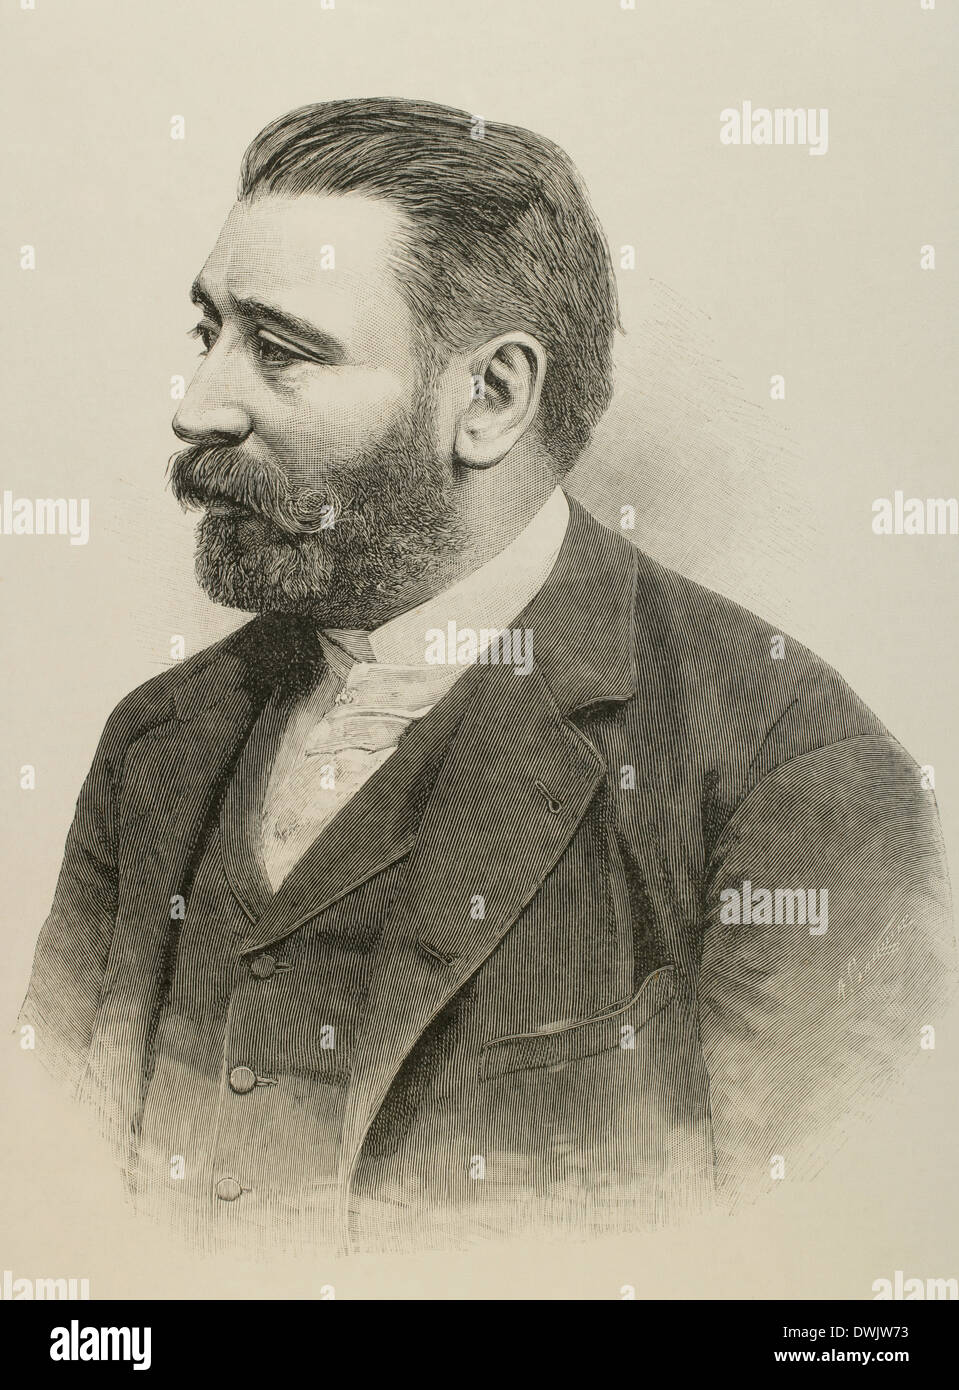 Aureliano Linares Rivas (1841 – 1903). Spanischer Politiker. Gravur. Stockfoto